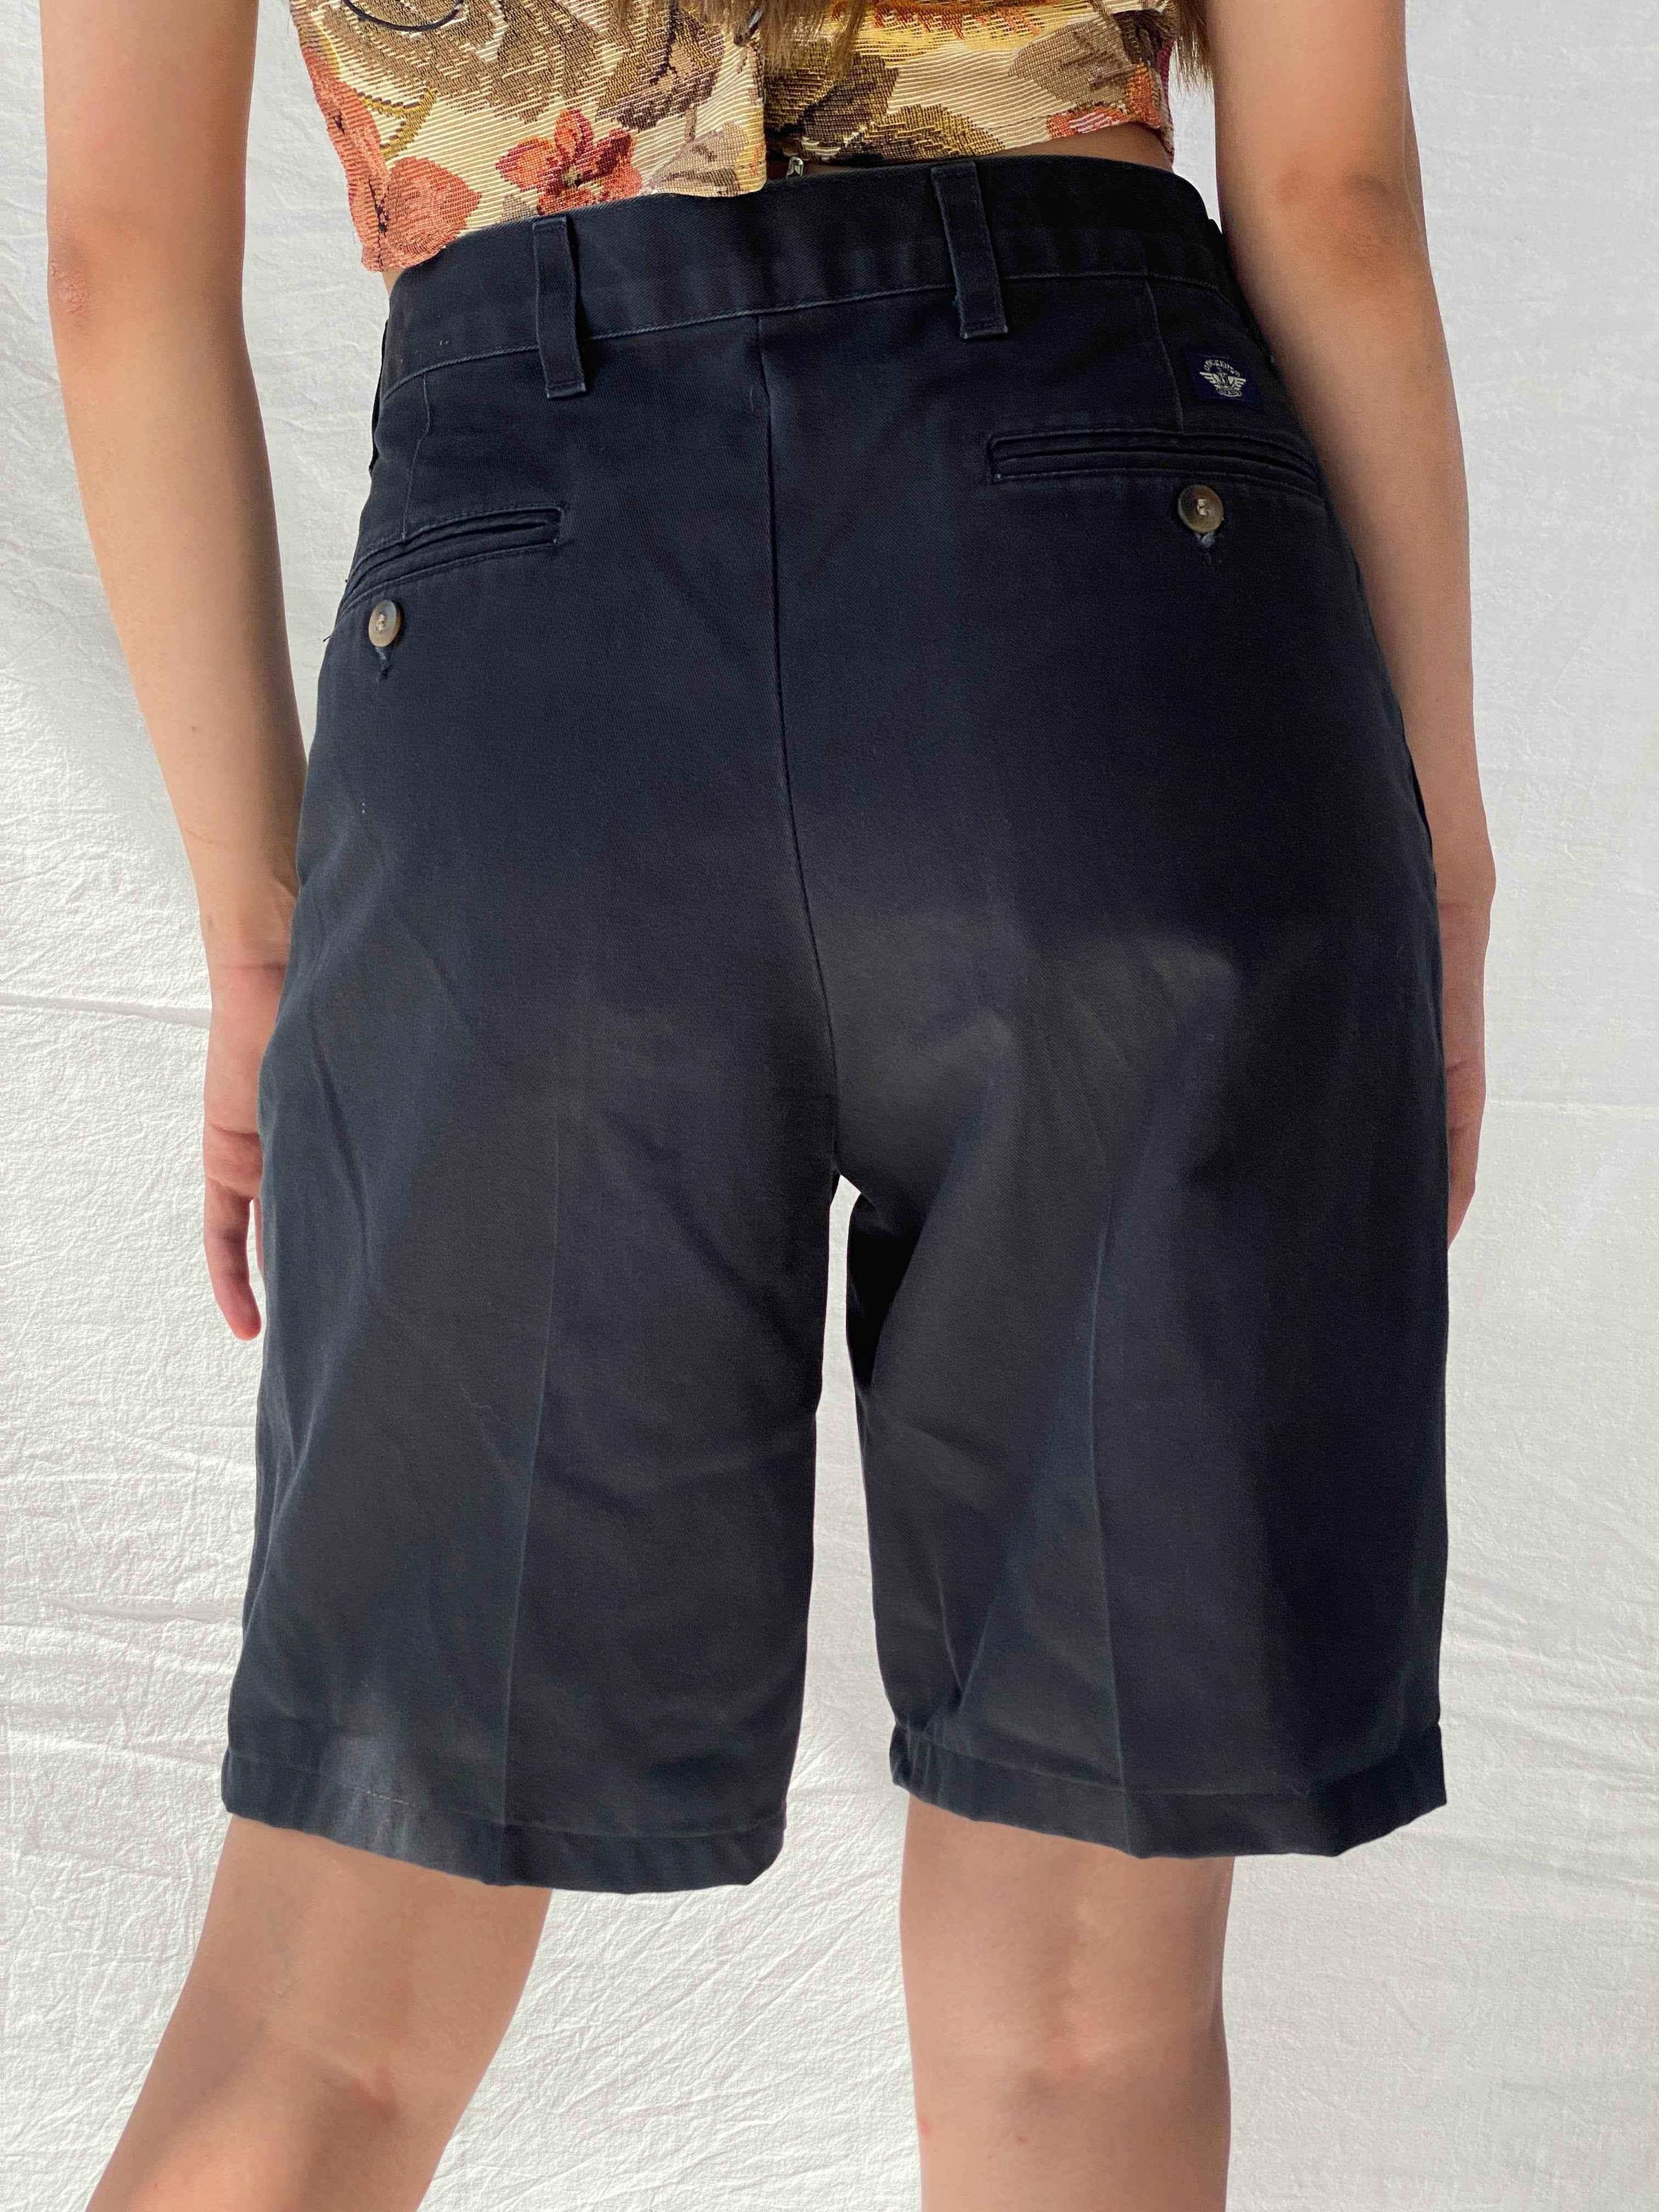 Reworked Dockers Shorts - Balagan Vintage Shorts 00s, 90s, Mira